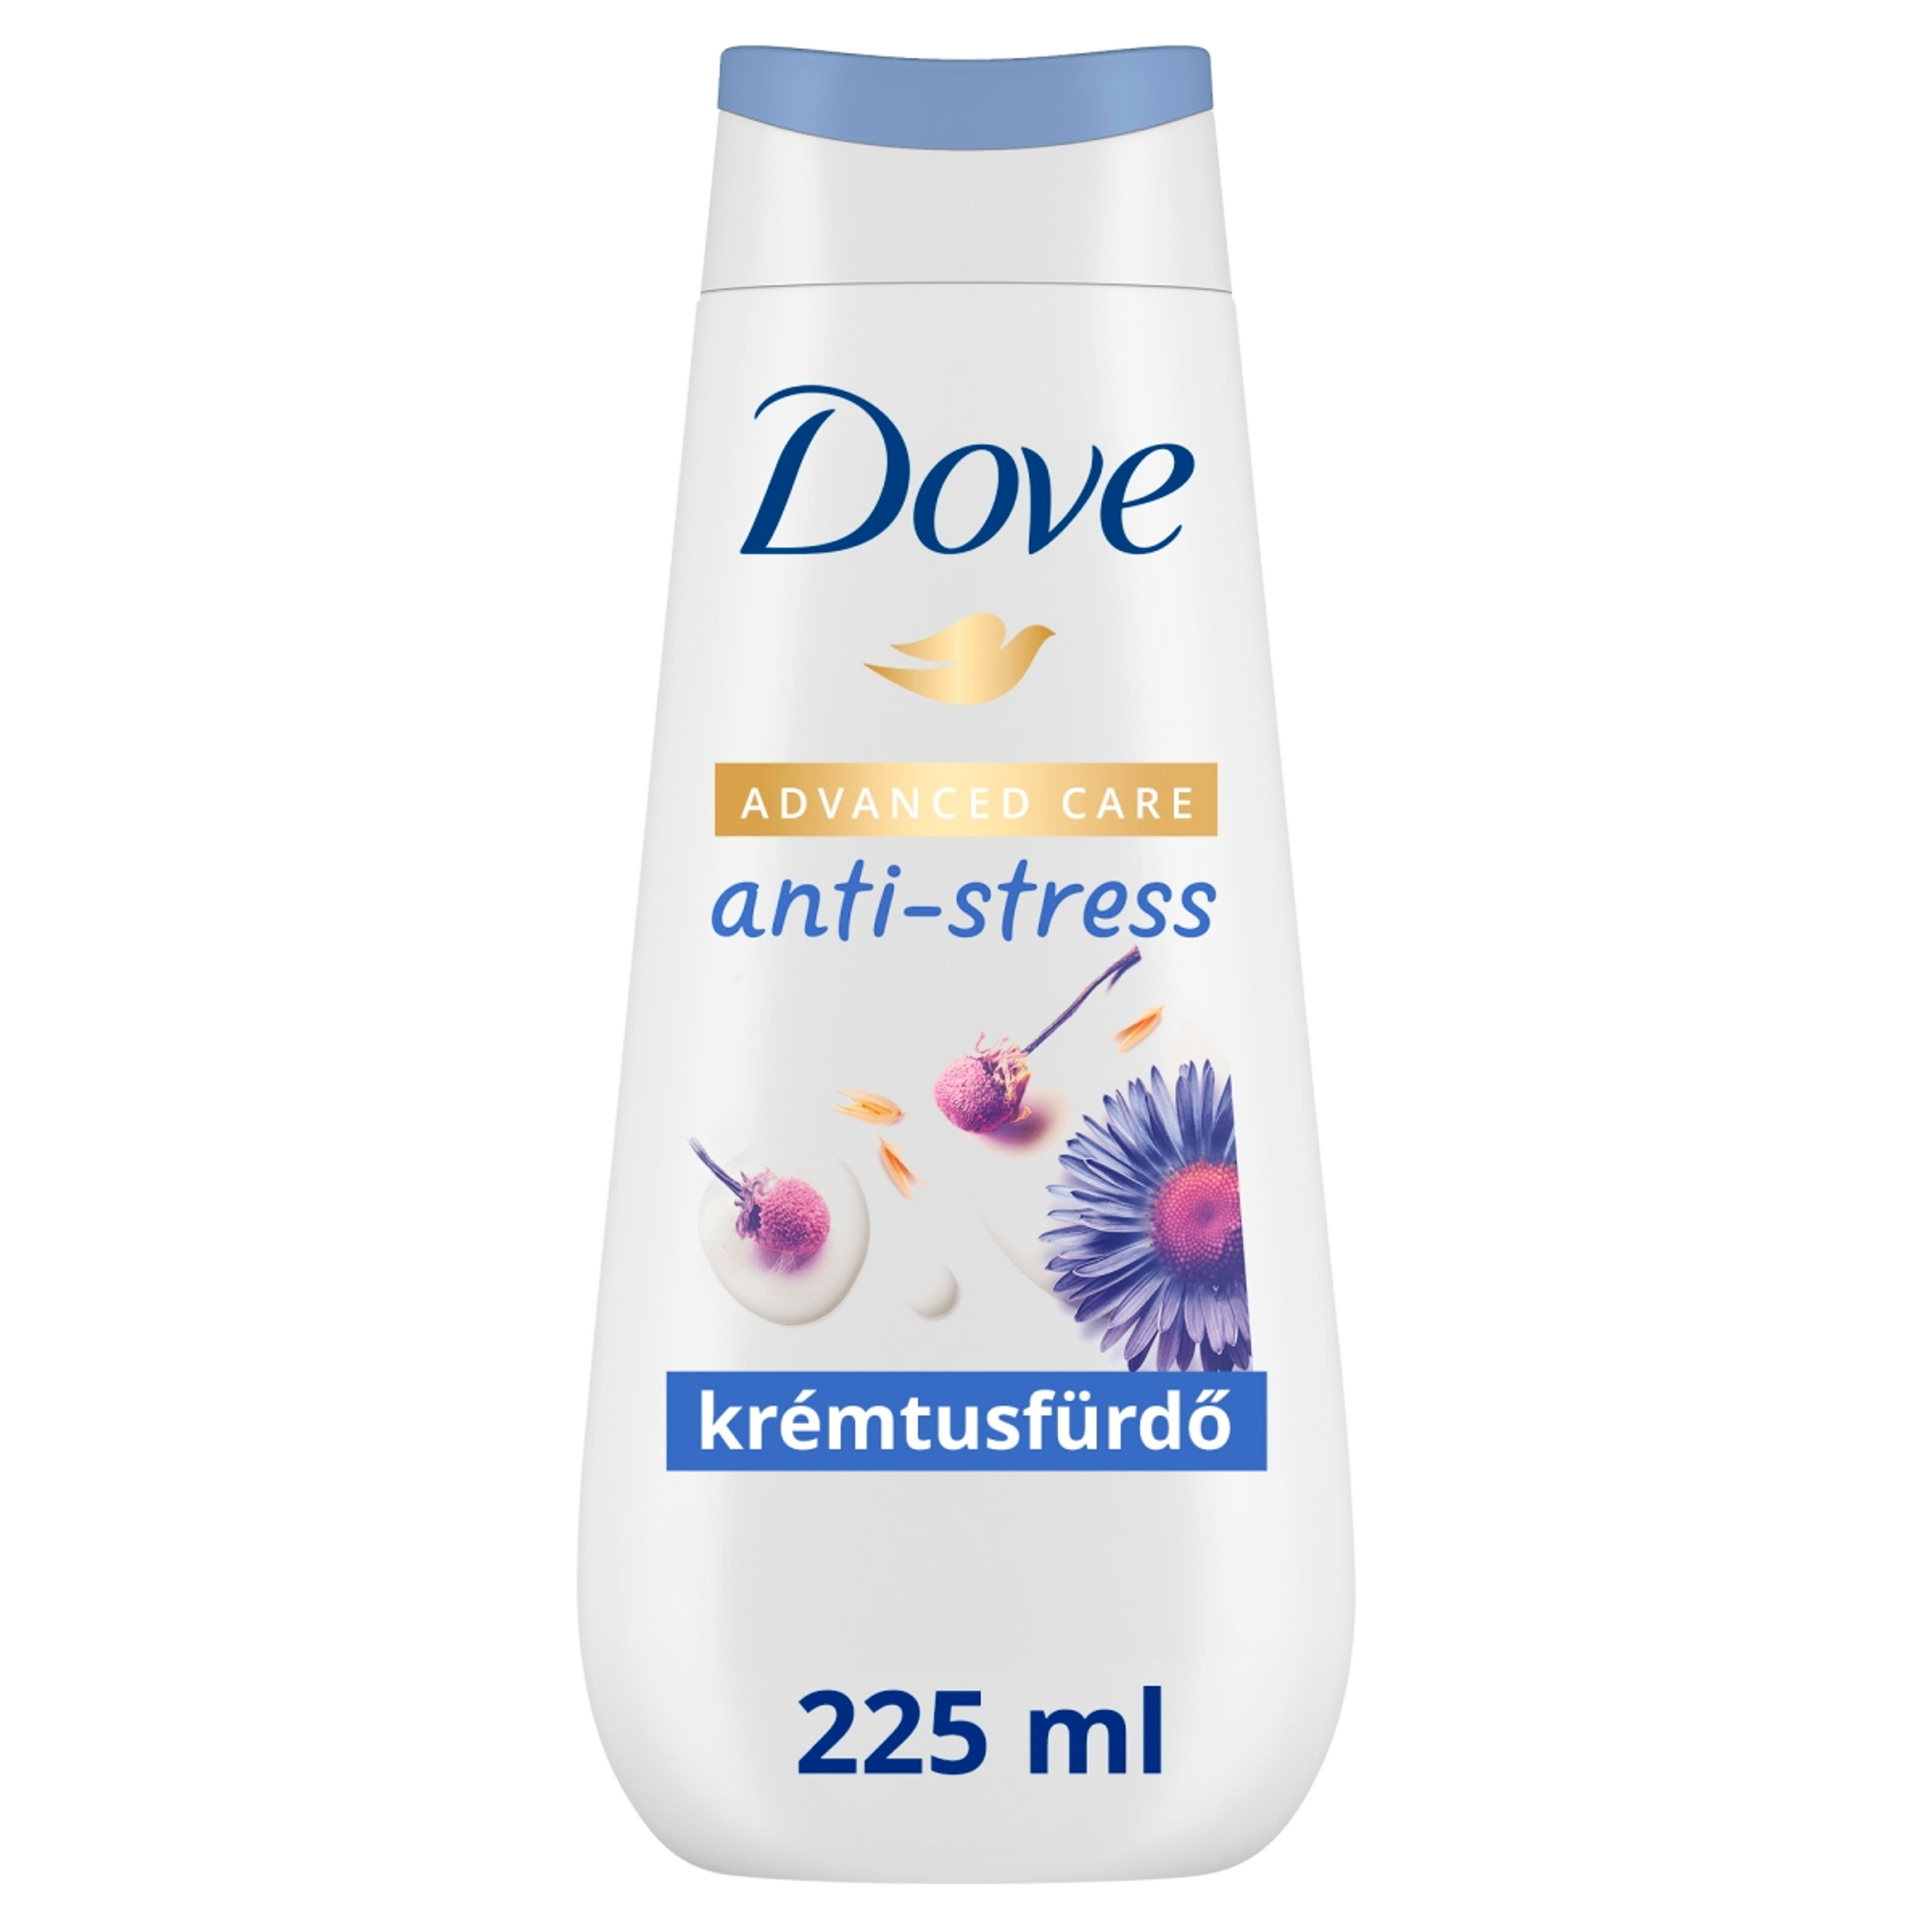 Dove Advanced Care Anti-Stress krémtusfürdő - 225 ml-2